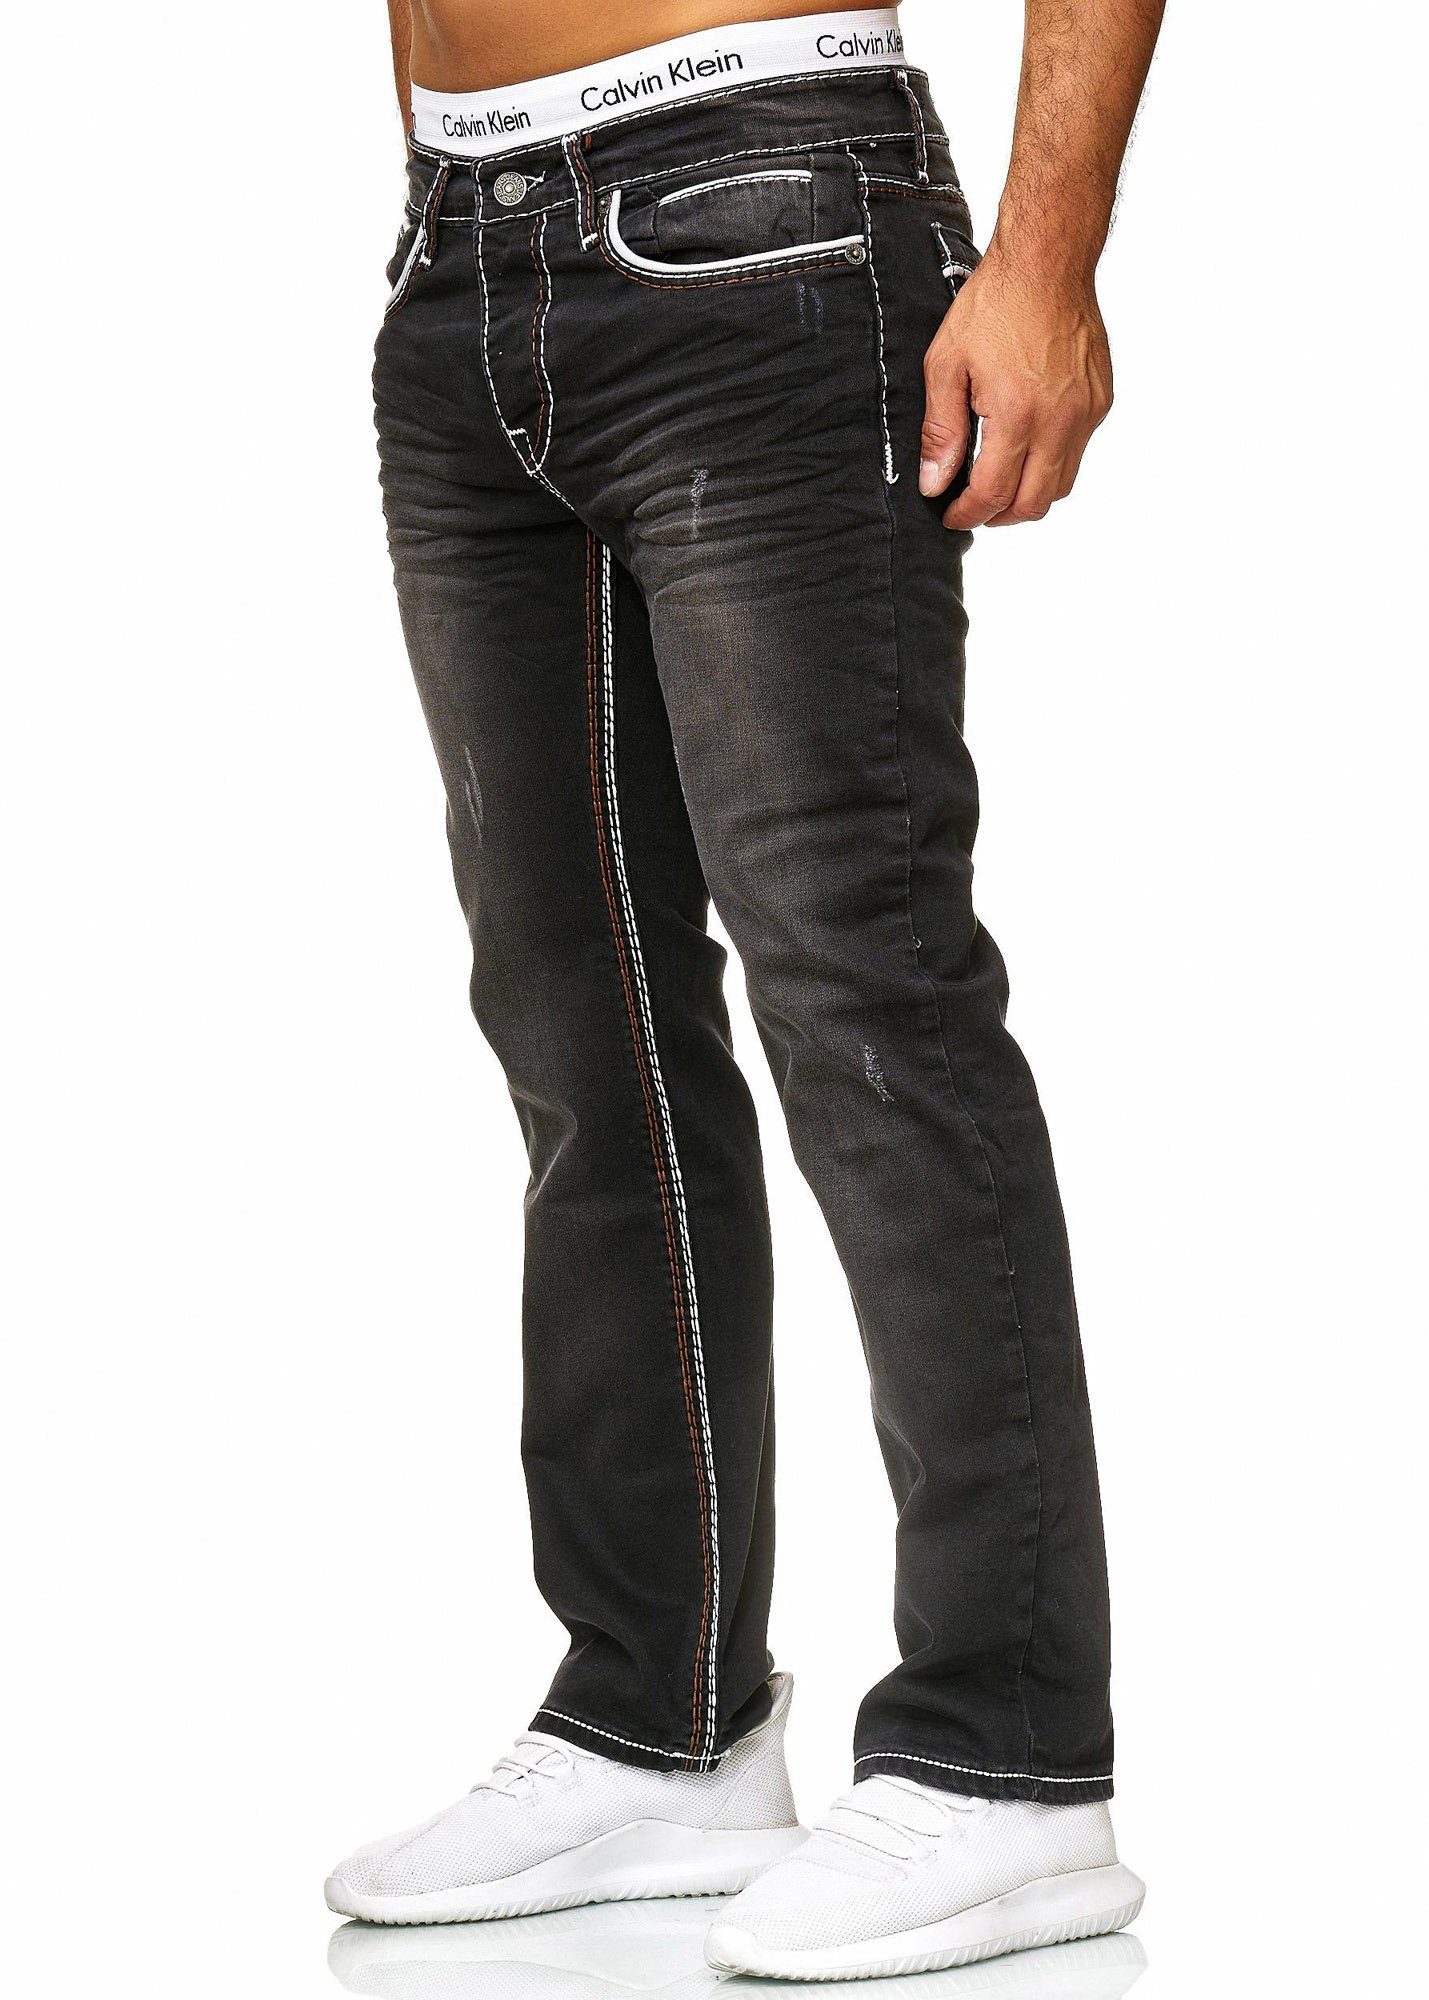 Fit Slim-fit-Jeans Modell 5167 Design Code47 Herren Jeans Used Code47 Denim Slim